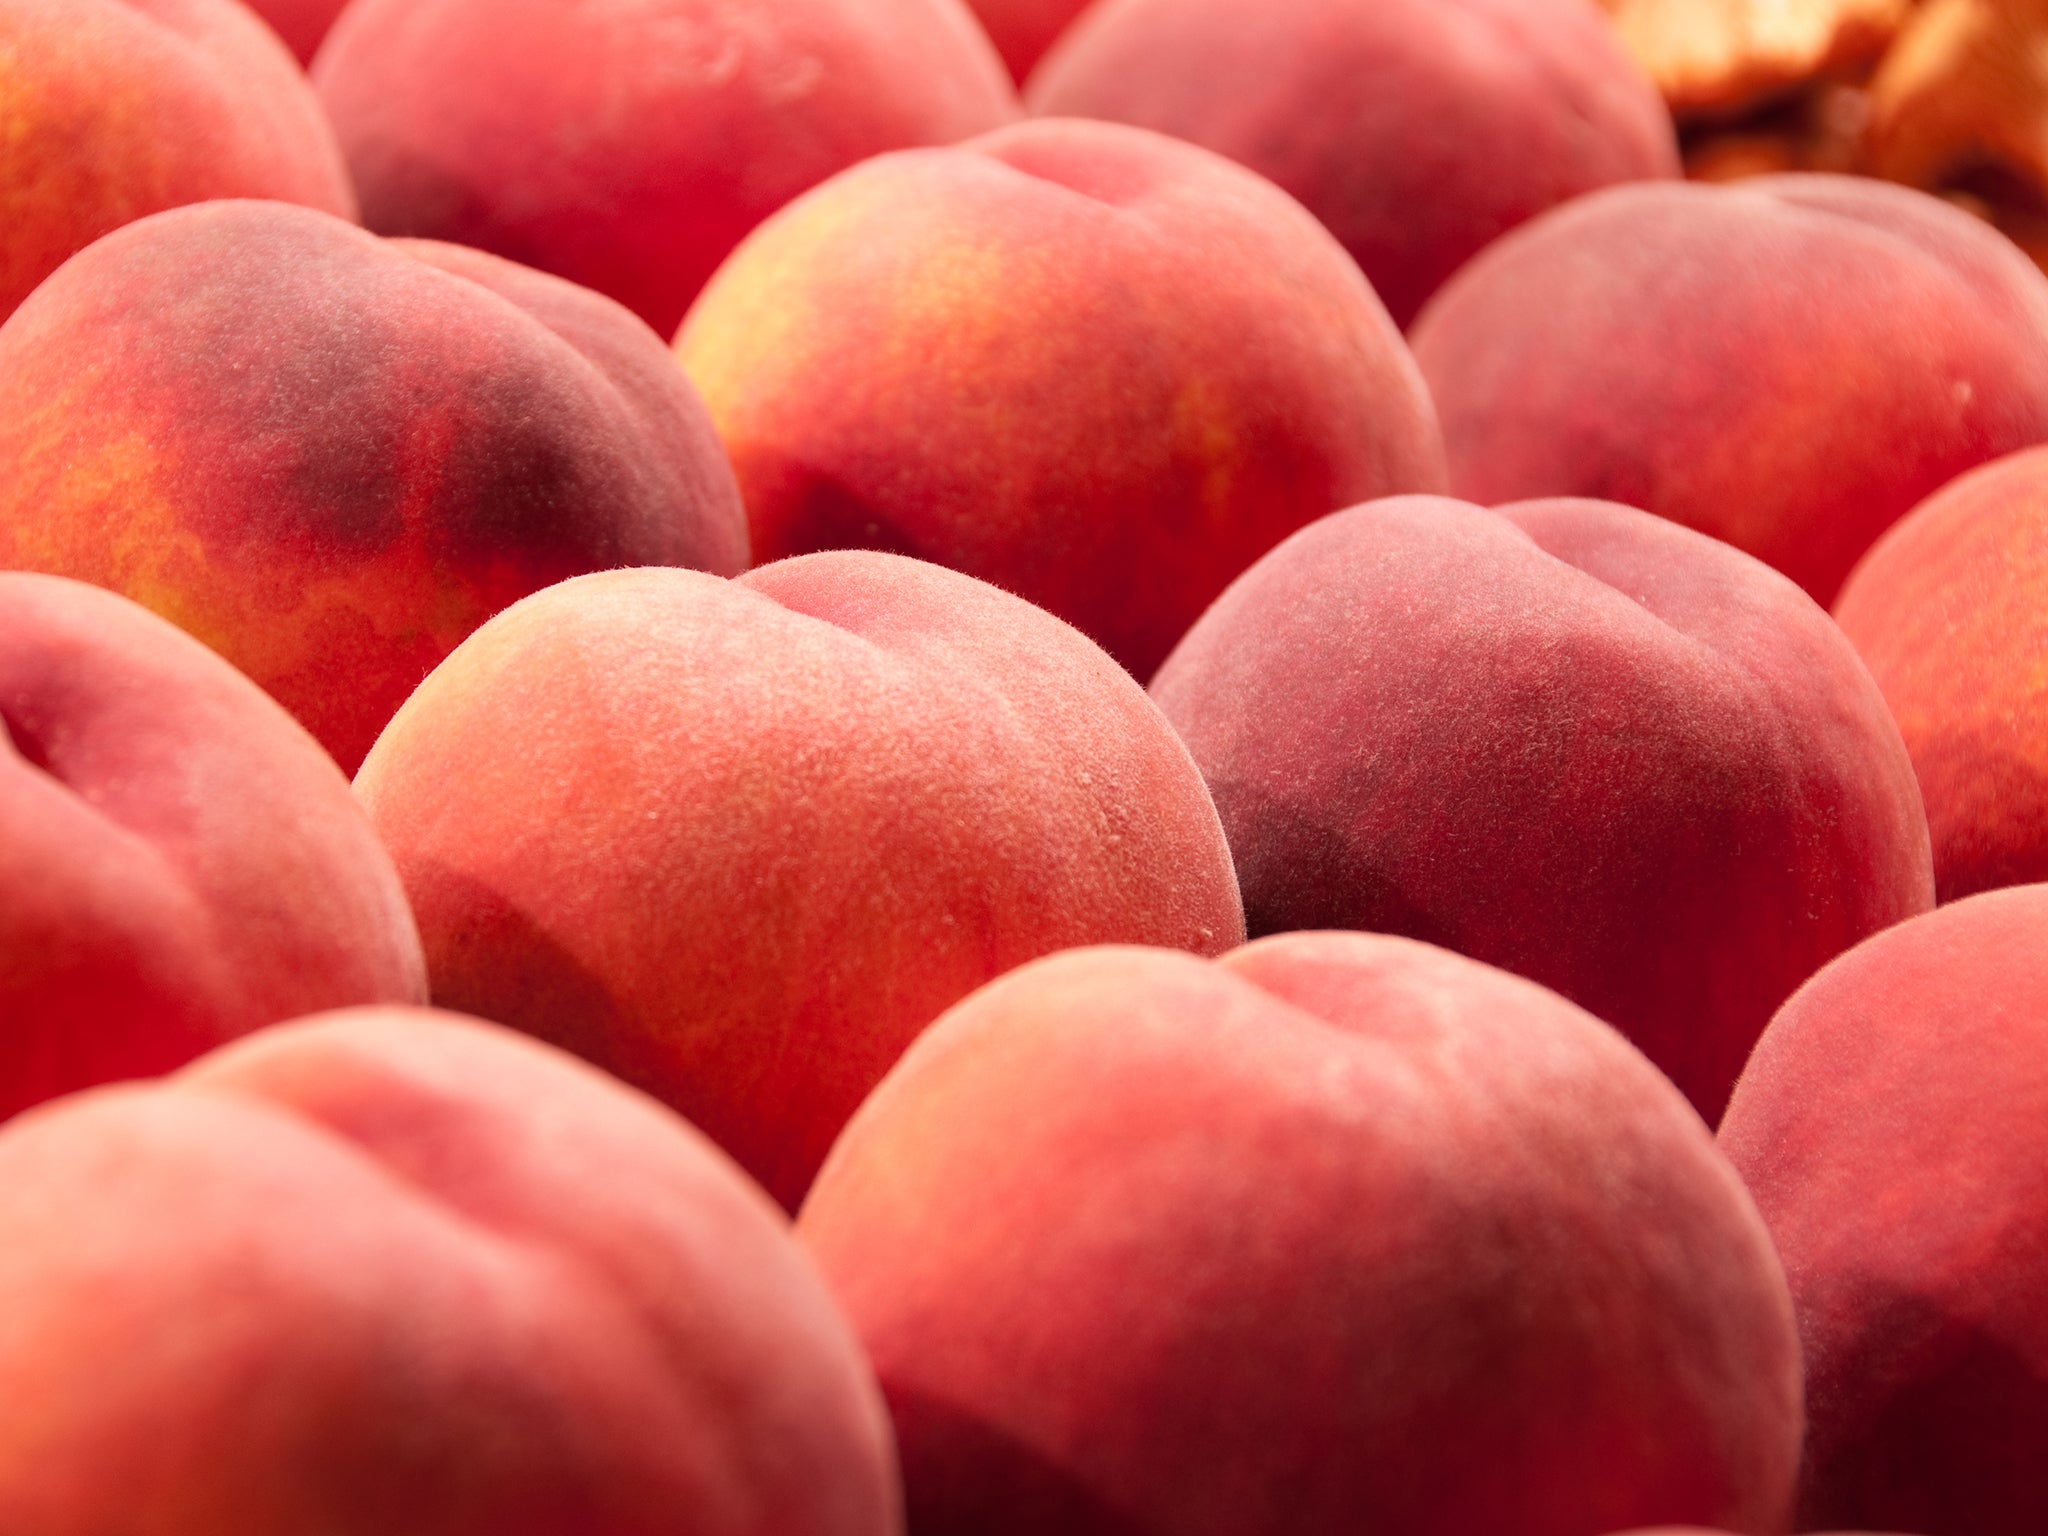 Peaches are a quintessential summer fruit